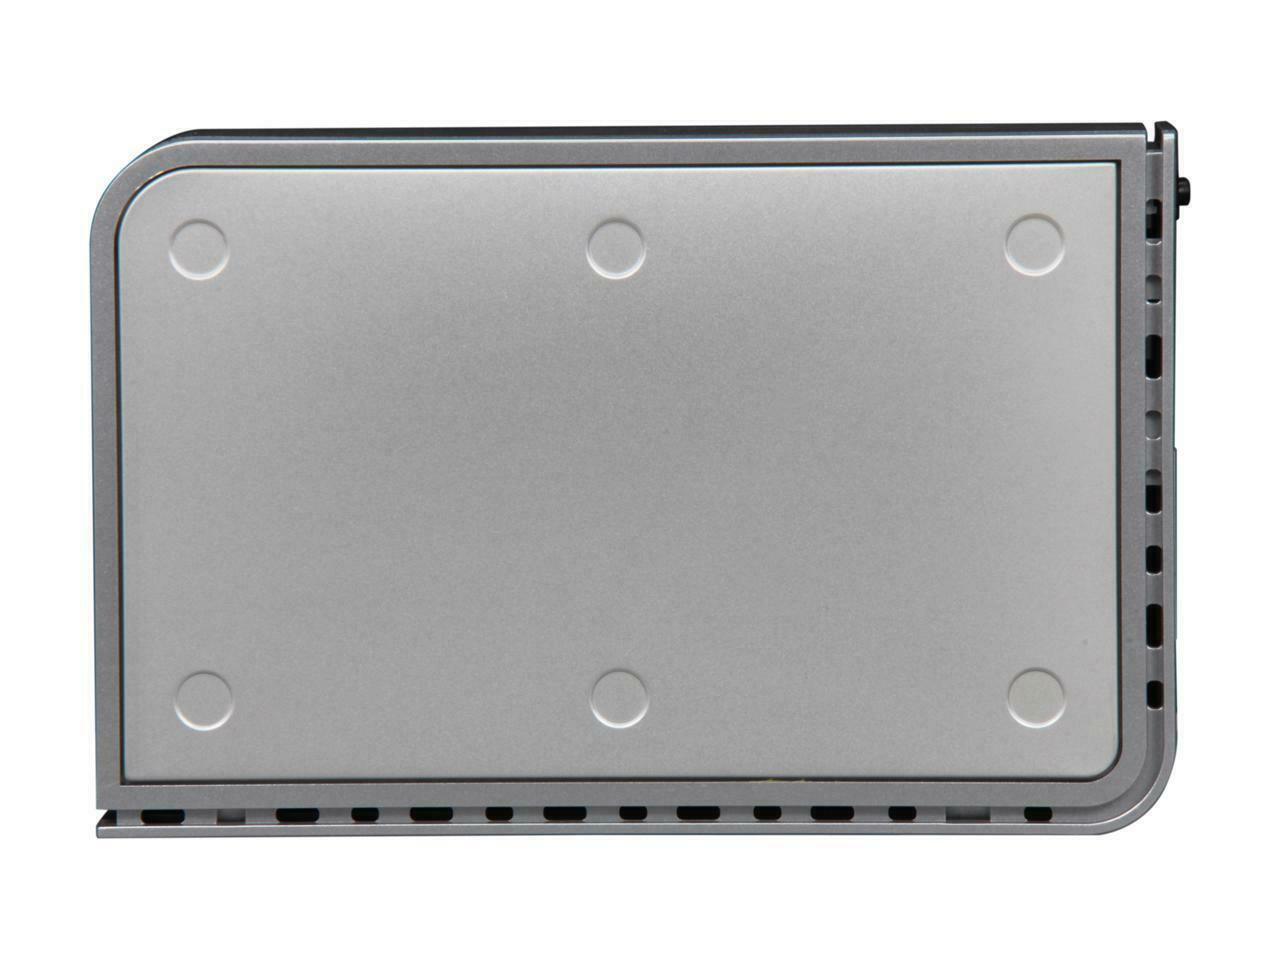 Hitachi 3.5" SimpleTech ProDrive 1TB External Hard Drive USB 2.0 0S00026, Silver